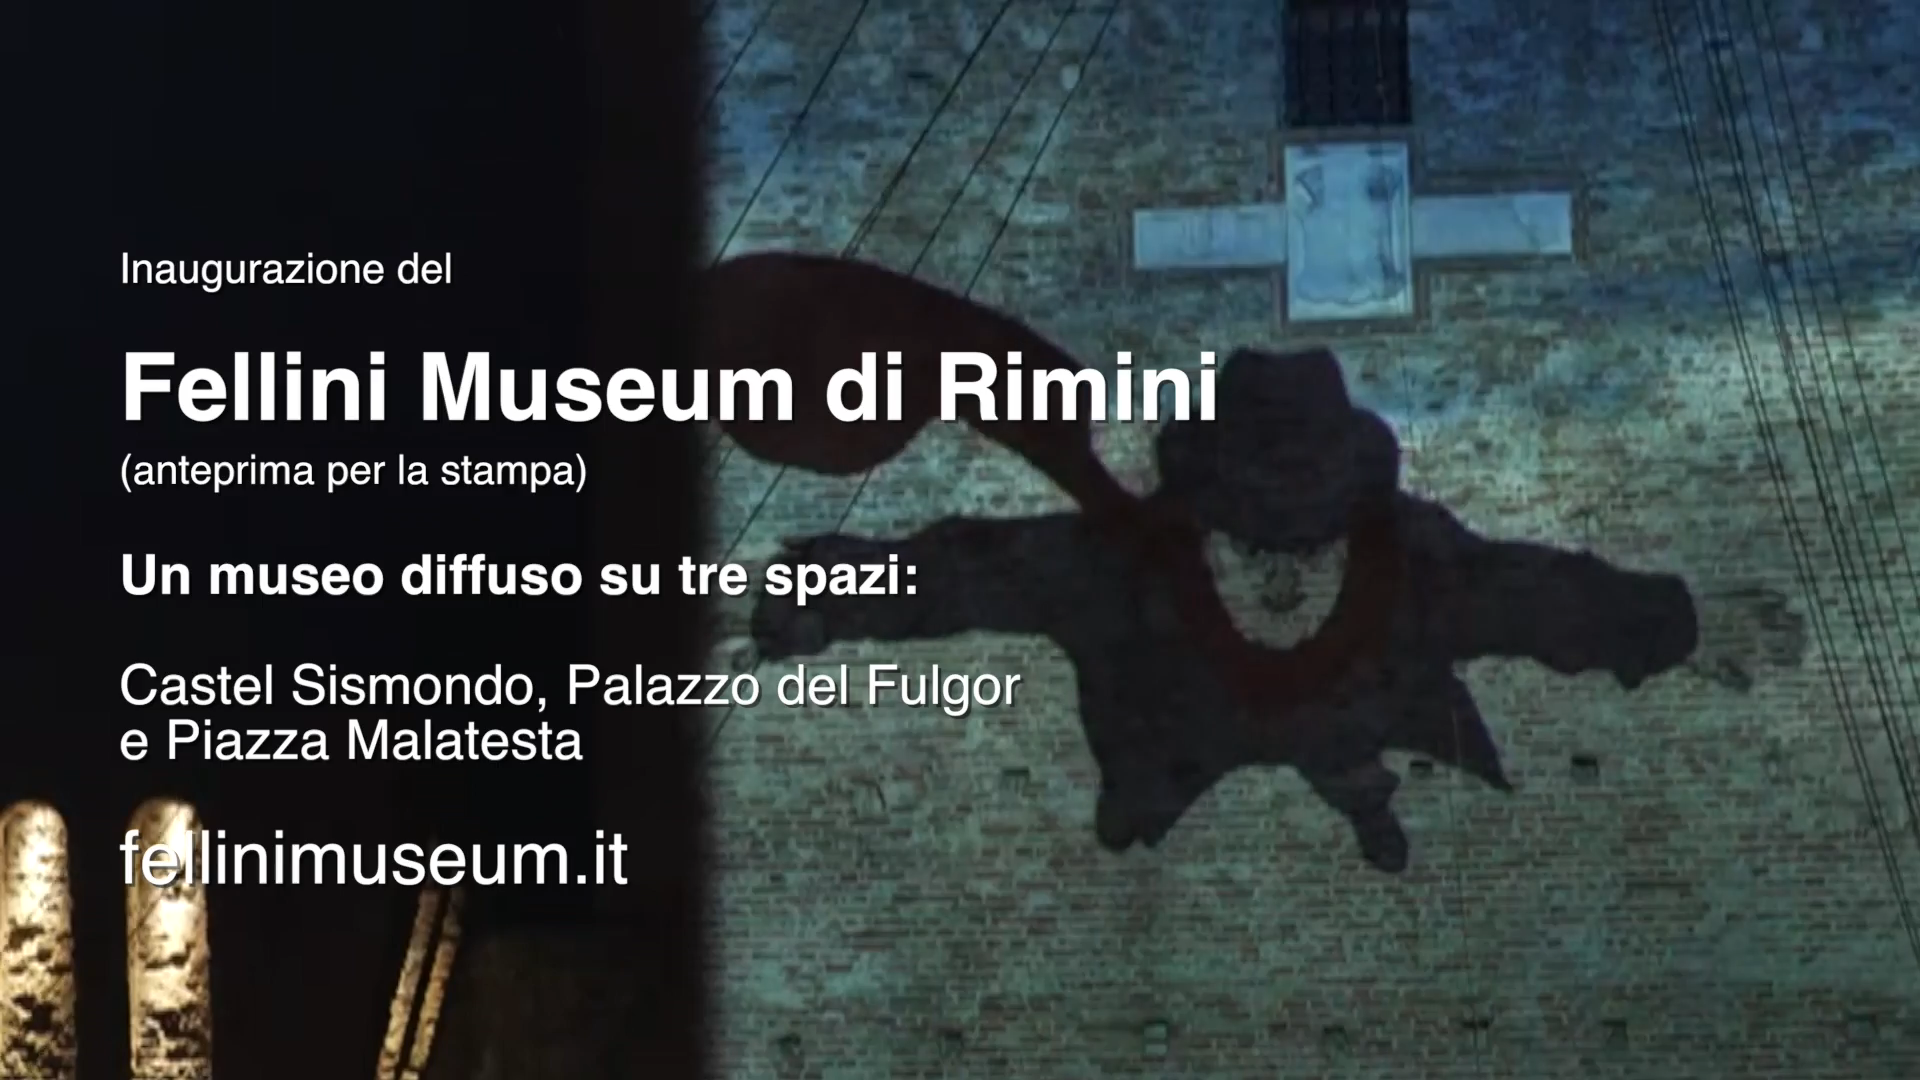 Fellini Museum di Rimini: l’inaugurazione